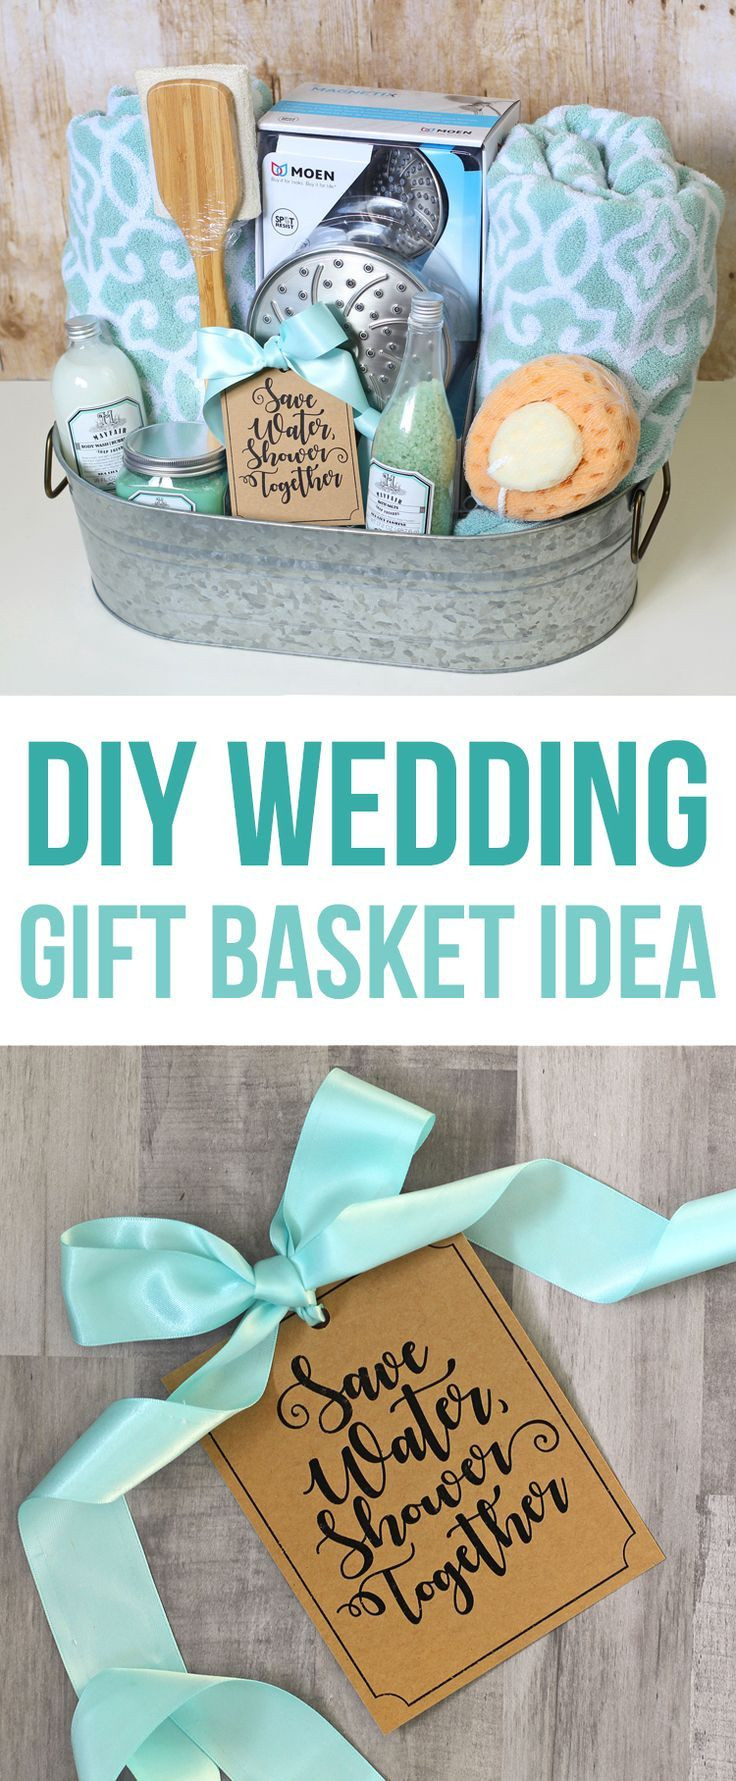 Wedding Photo Gift Ideas
 Shower Themed DIY Wedding Gift Basket Idea